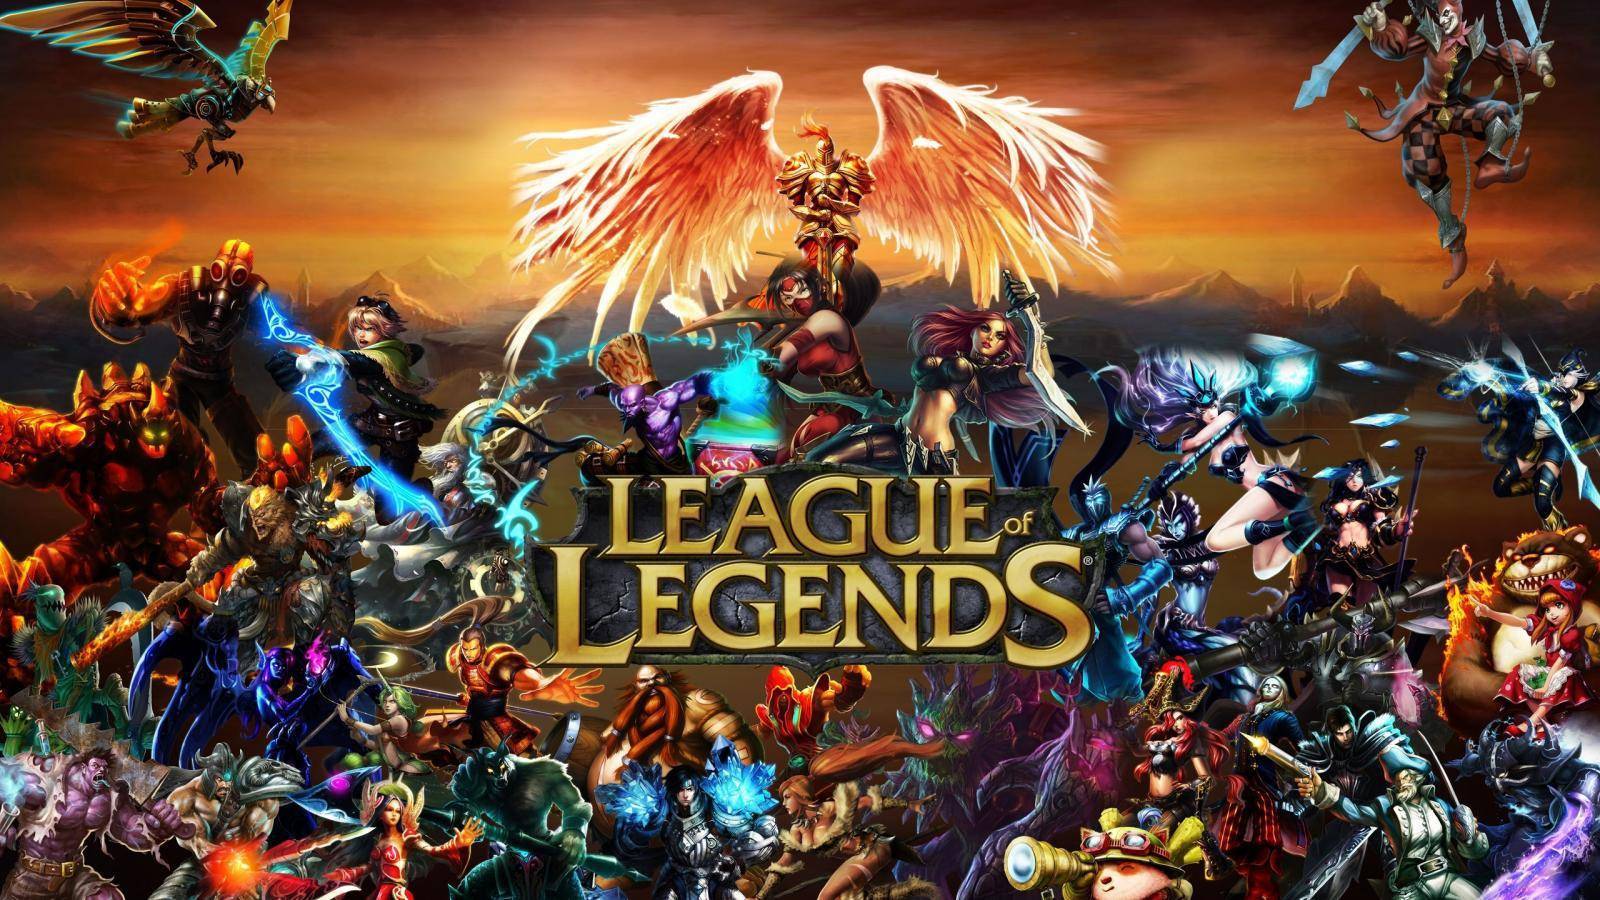 Card EUR Legends Key Riot 10 Price of of - Points League (PC) cheap